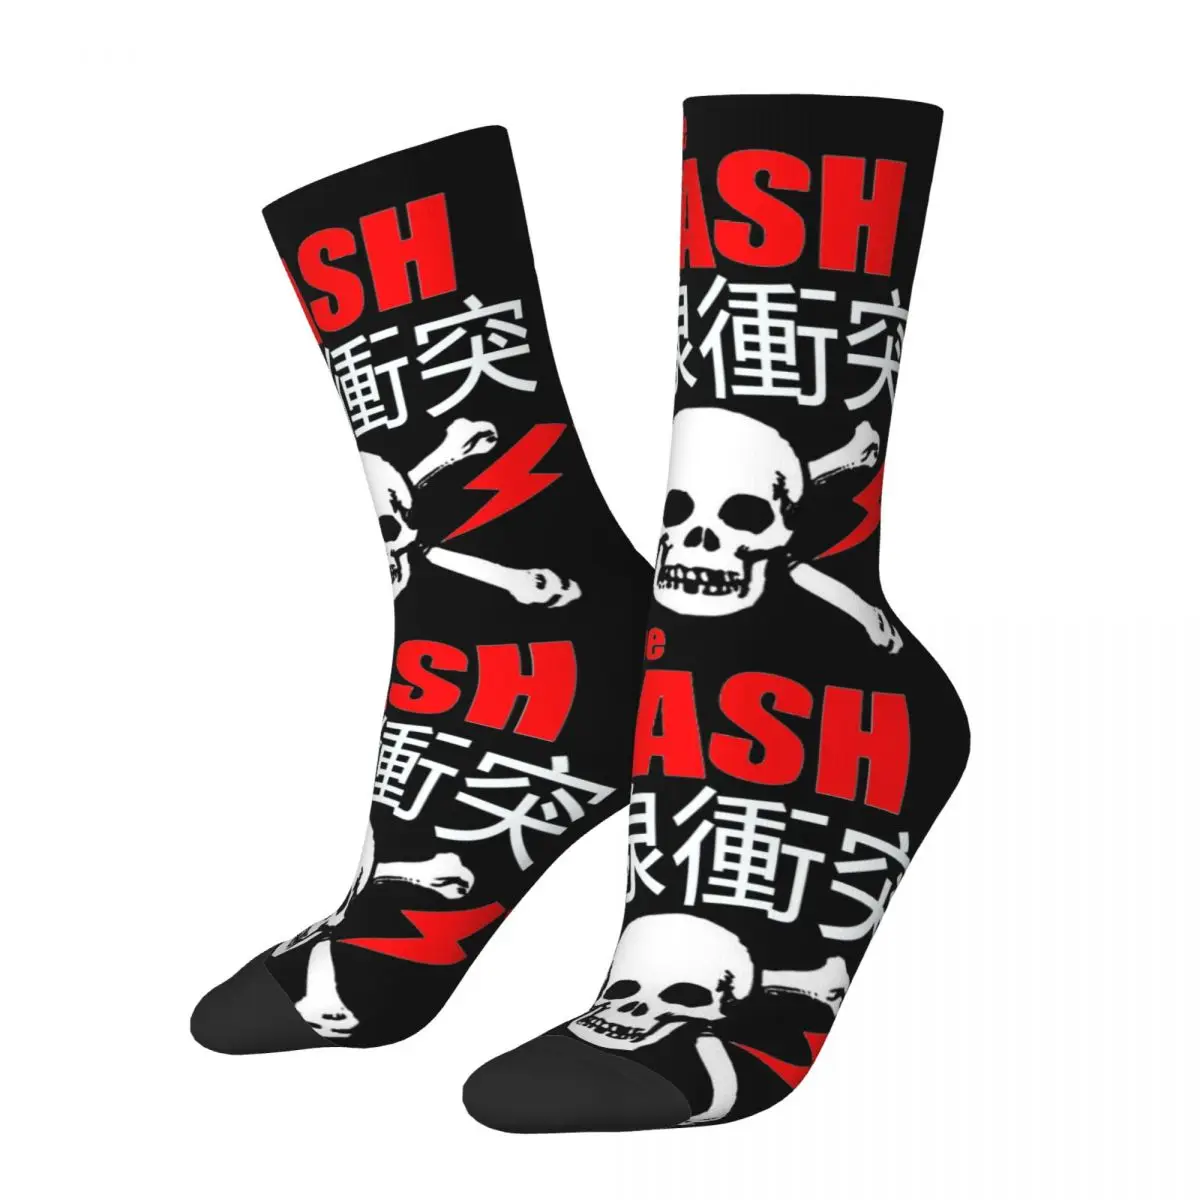 The Clash Red Unisex Socks Cycling 3D Print Happy Socks Street Style Crazy Sock